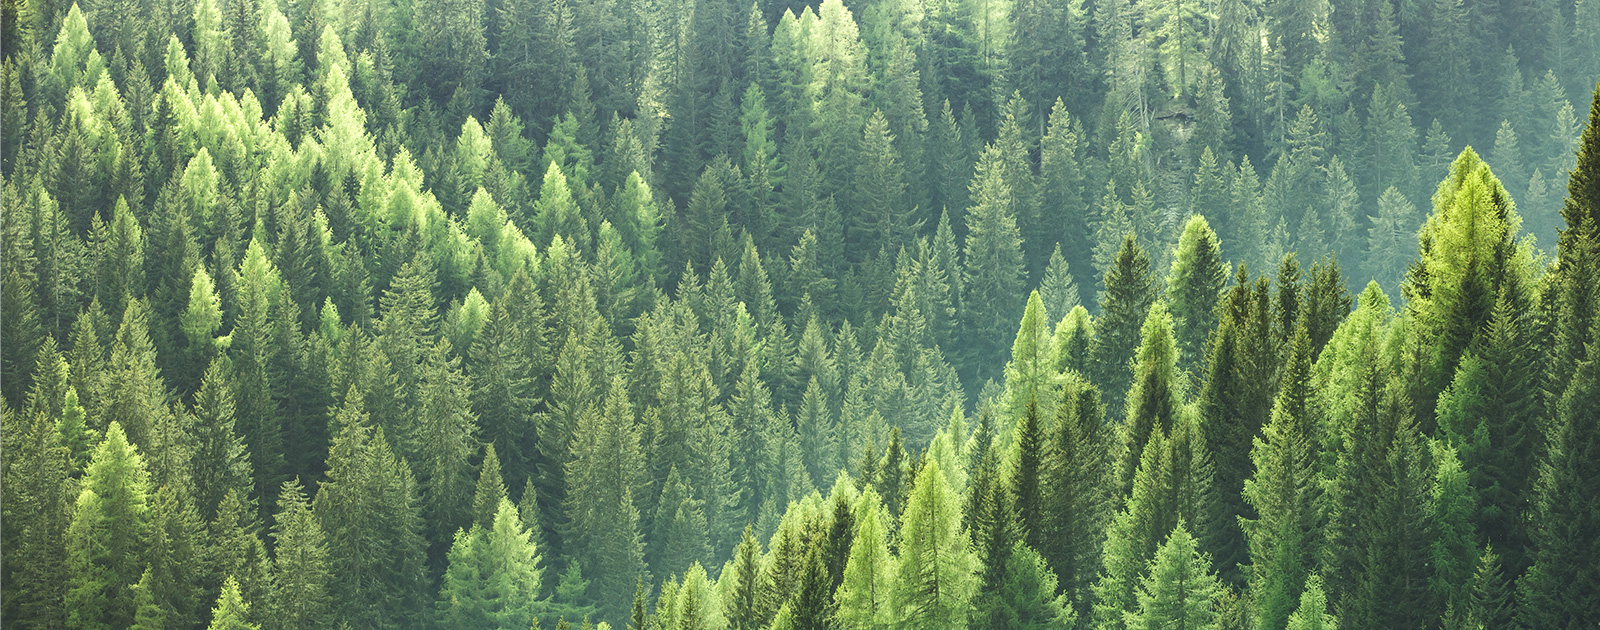 Bomen – Milieu en duurzaamheid